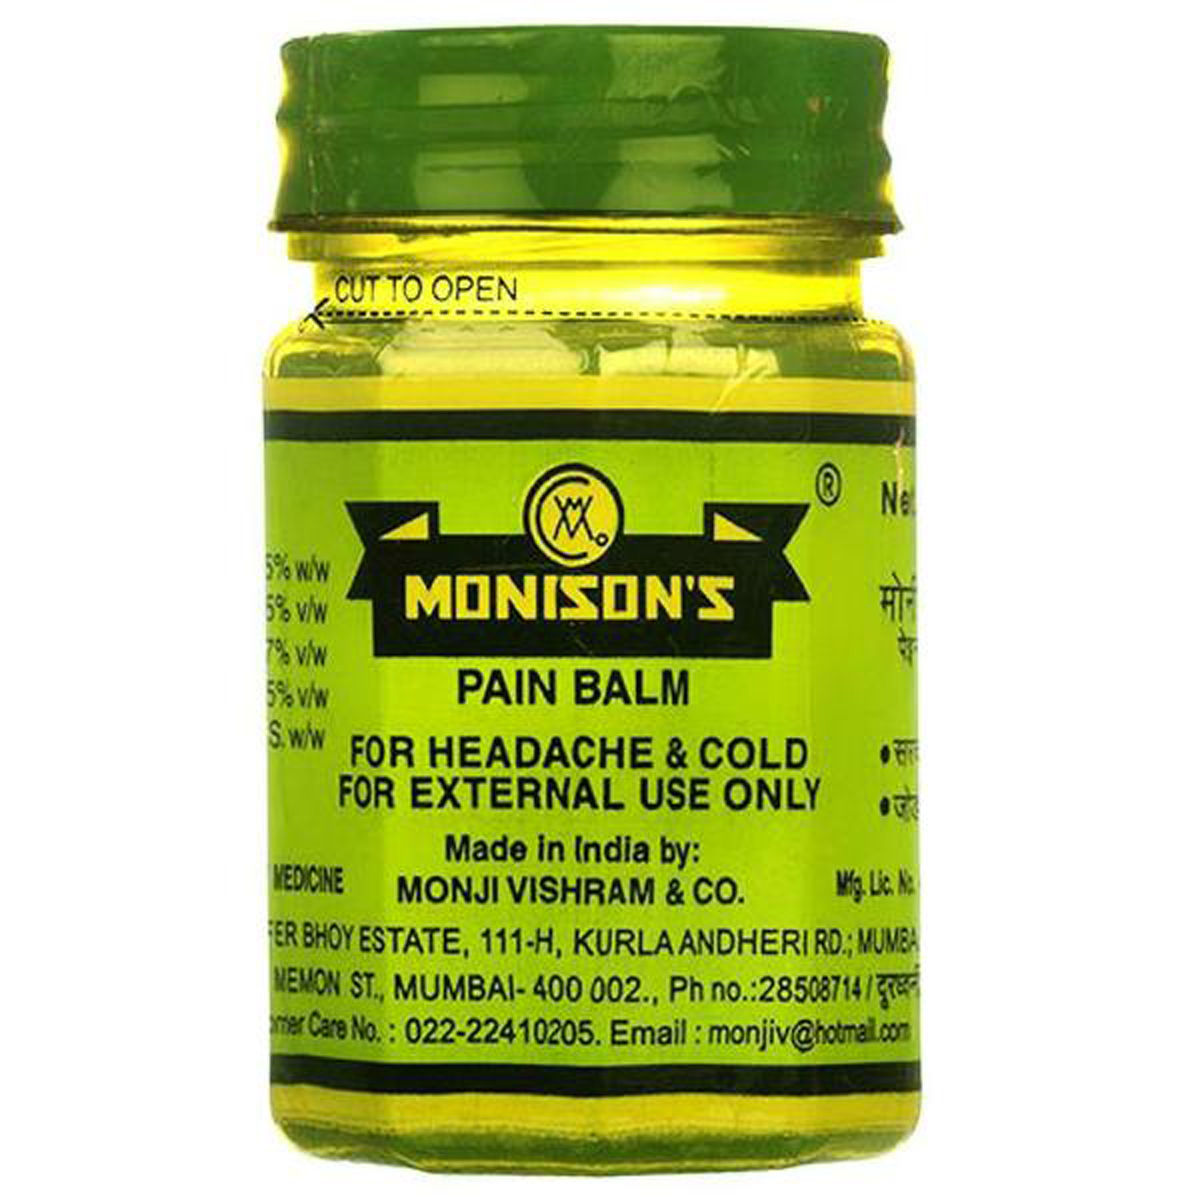 Monison's Pain Balm, 45 gm, Pack of 1 